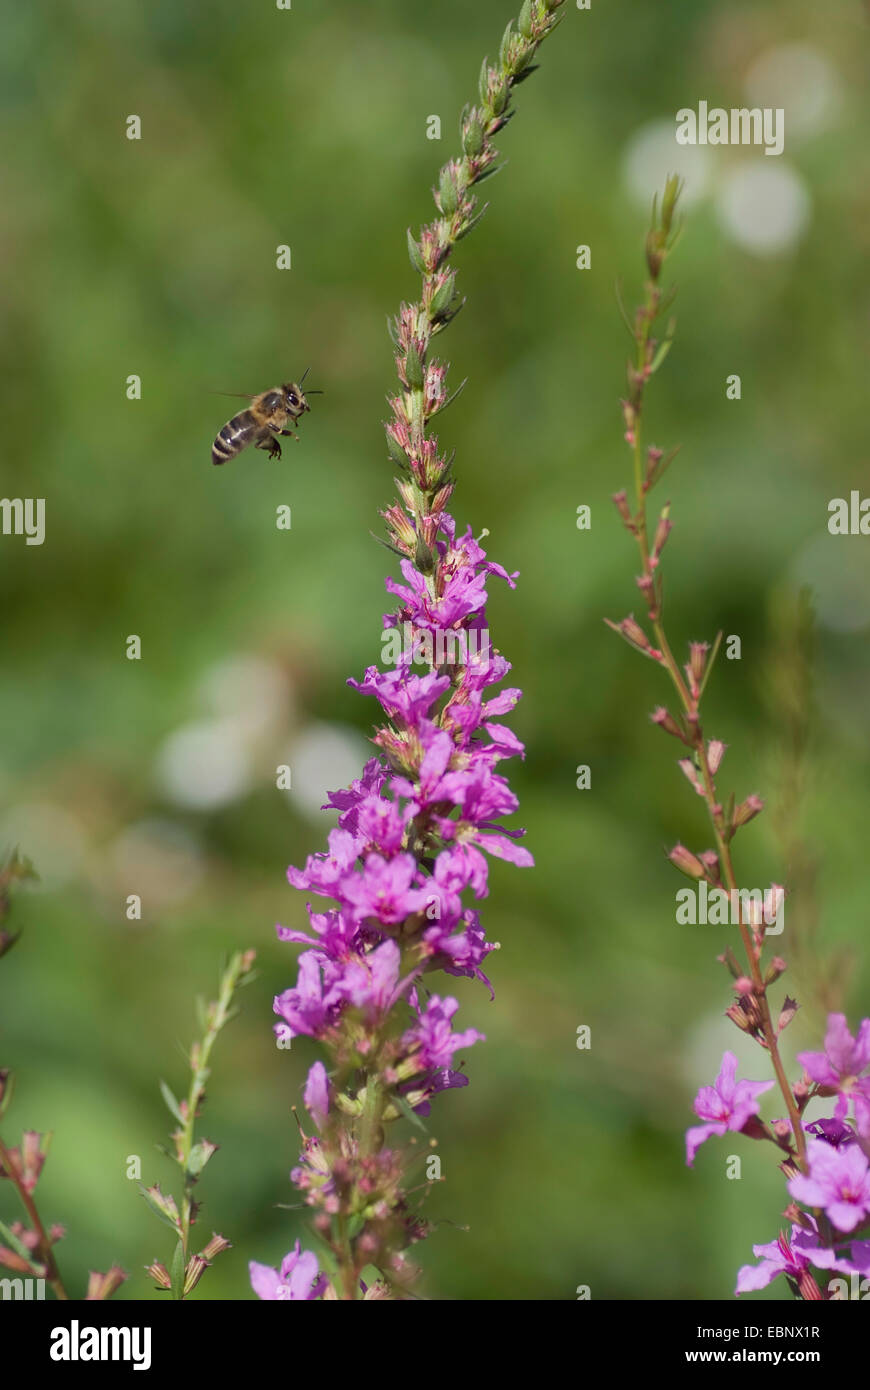 European Wand Loosestrife, Purple Loosestrife, Wand Loosestrife (Lythrum virgatum), bee approaching an inflorescence, Germany, BGFFM Stock Photo